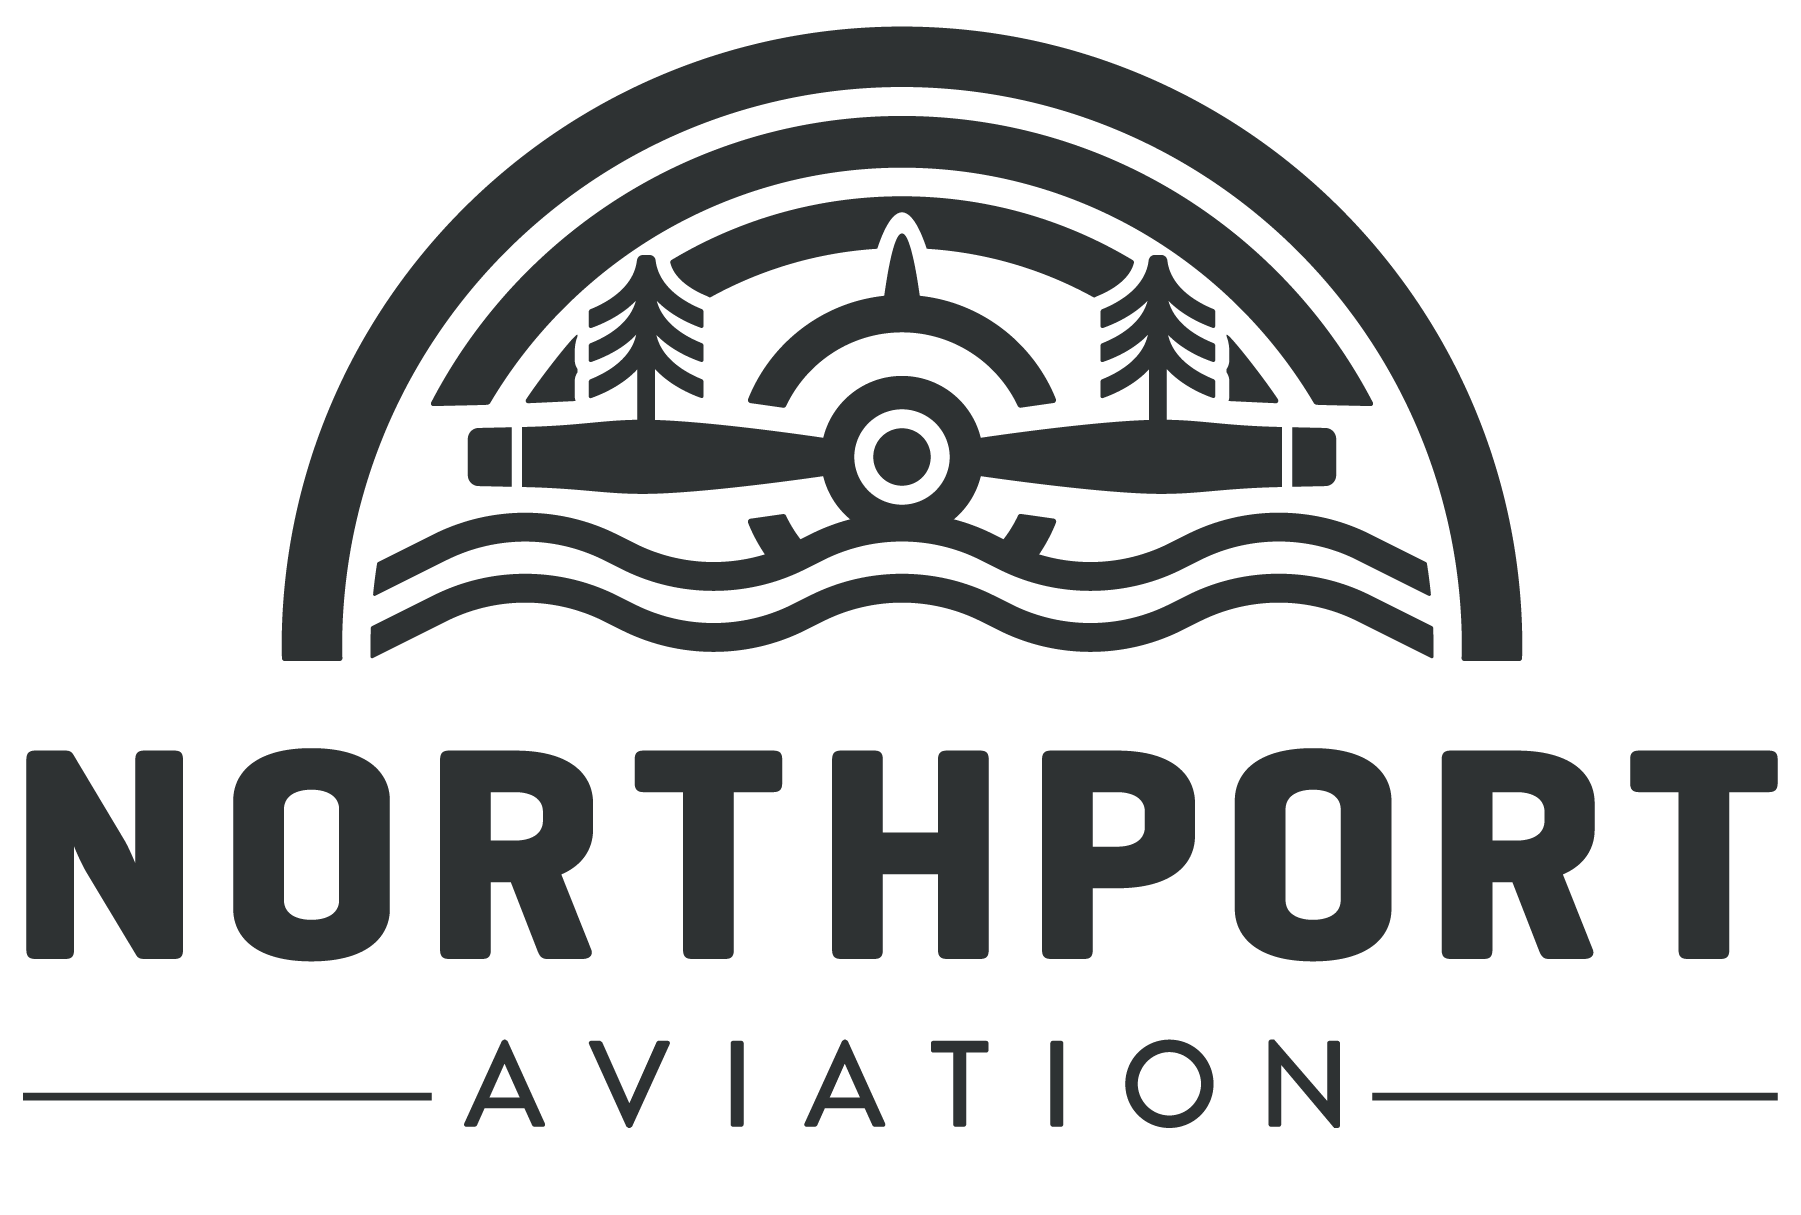 Northport Aviation